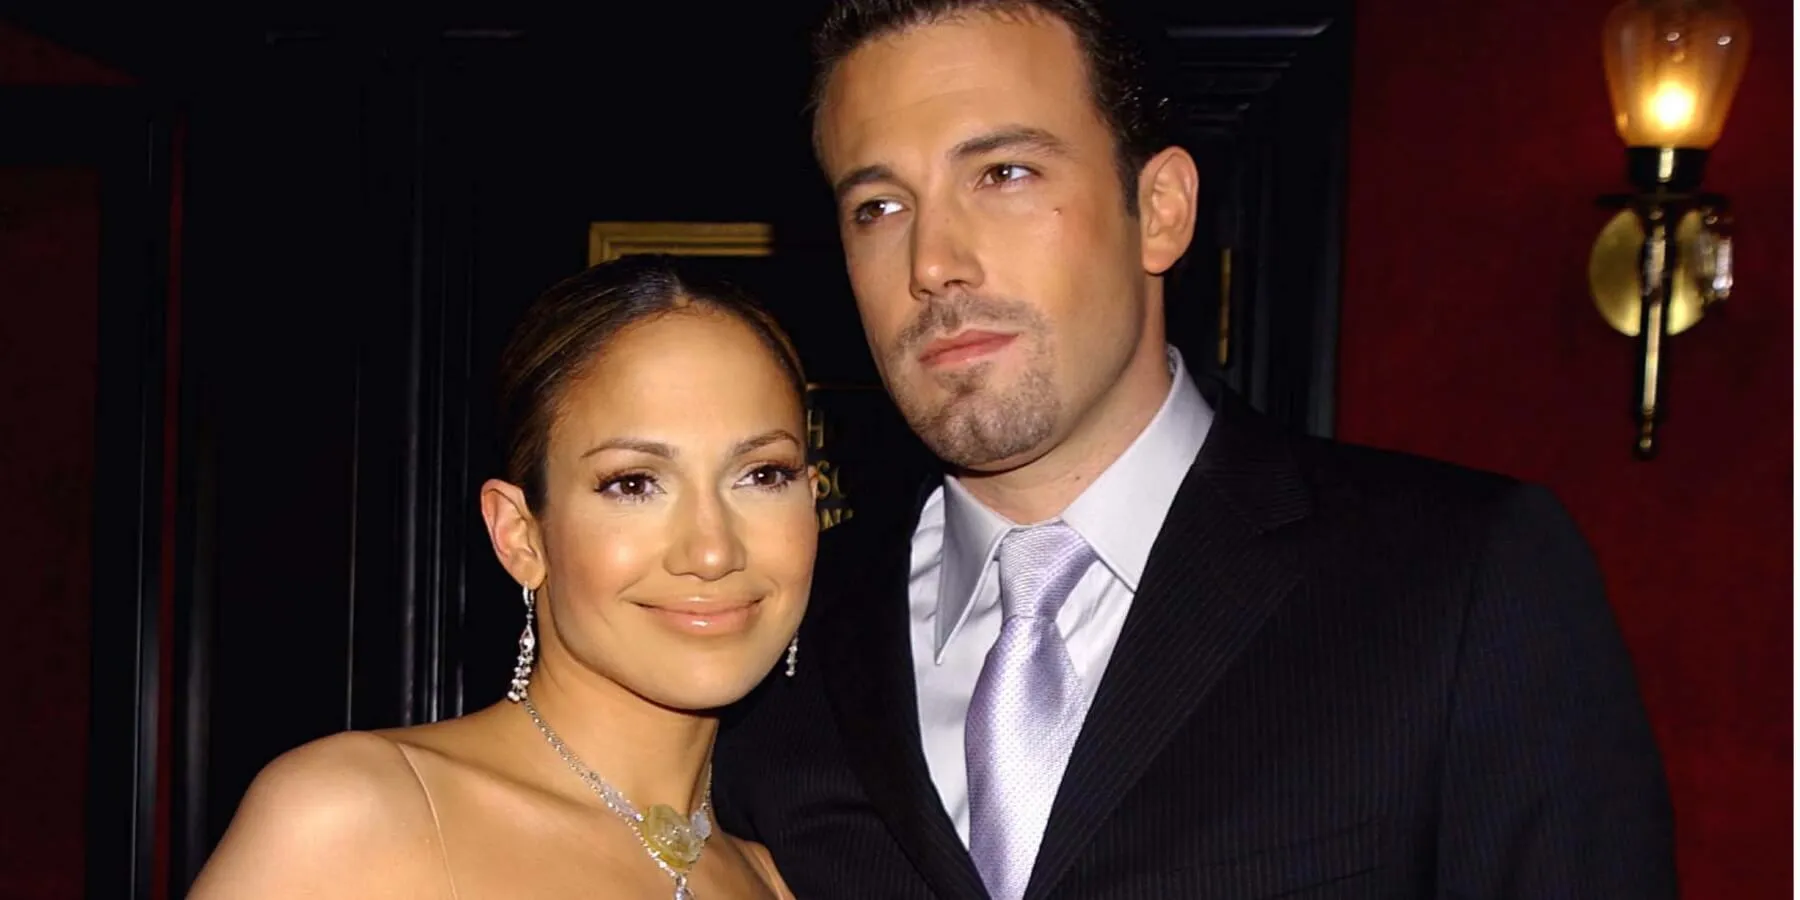 Jennifer Lopez and Ben Affleck photographed in 2002